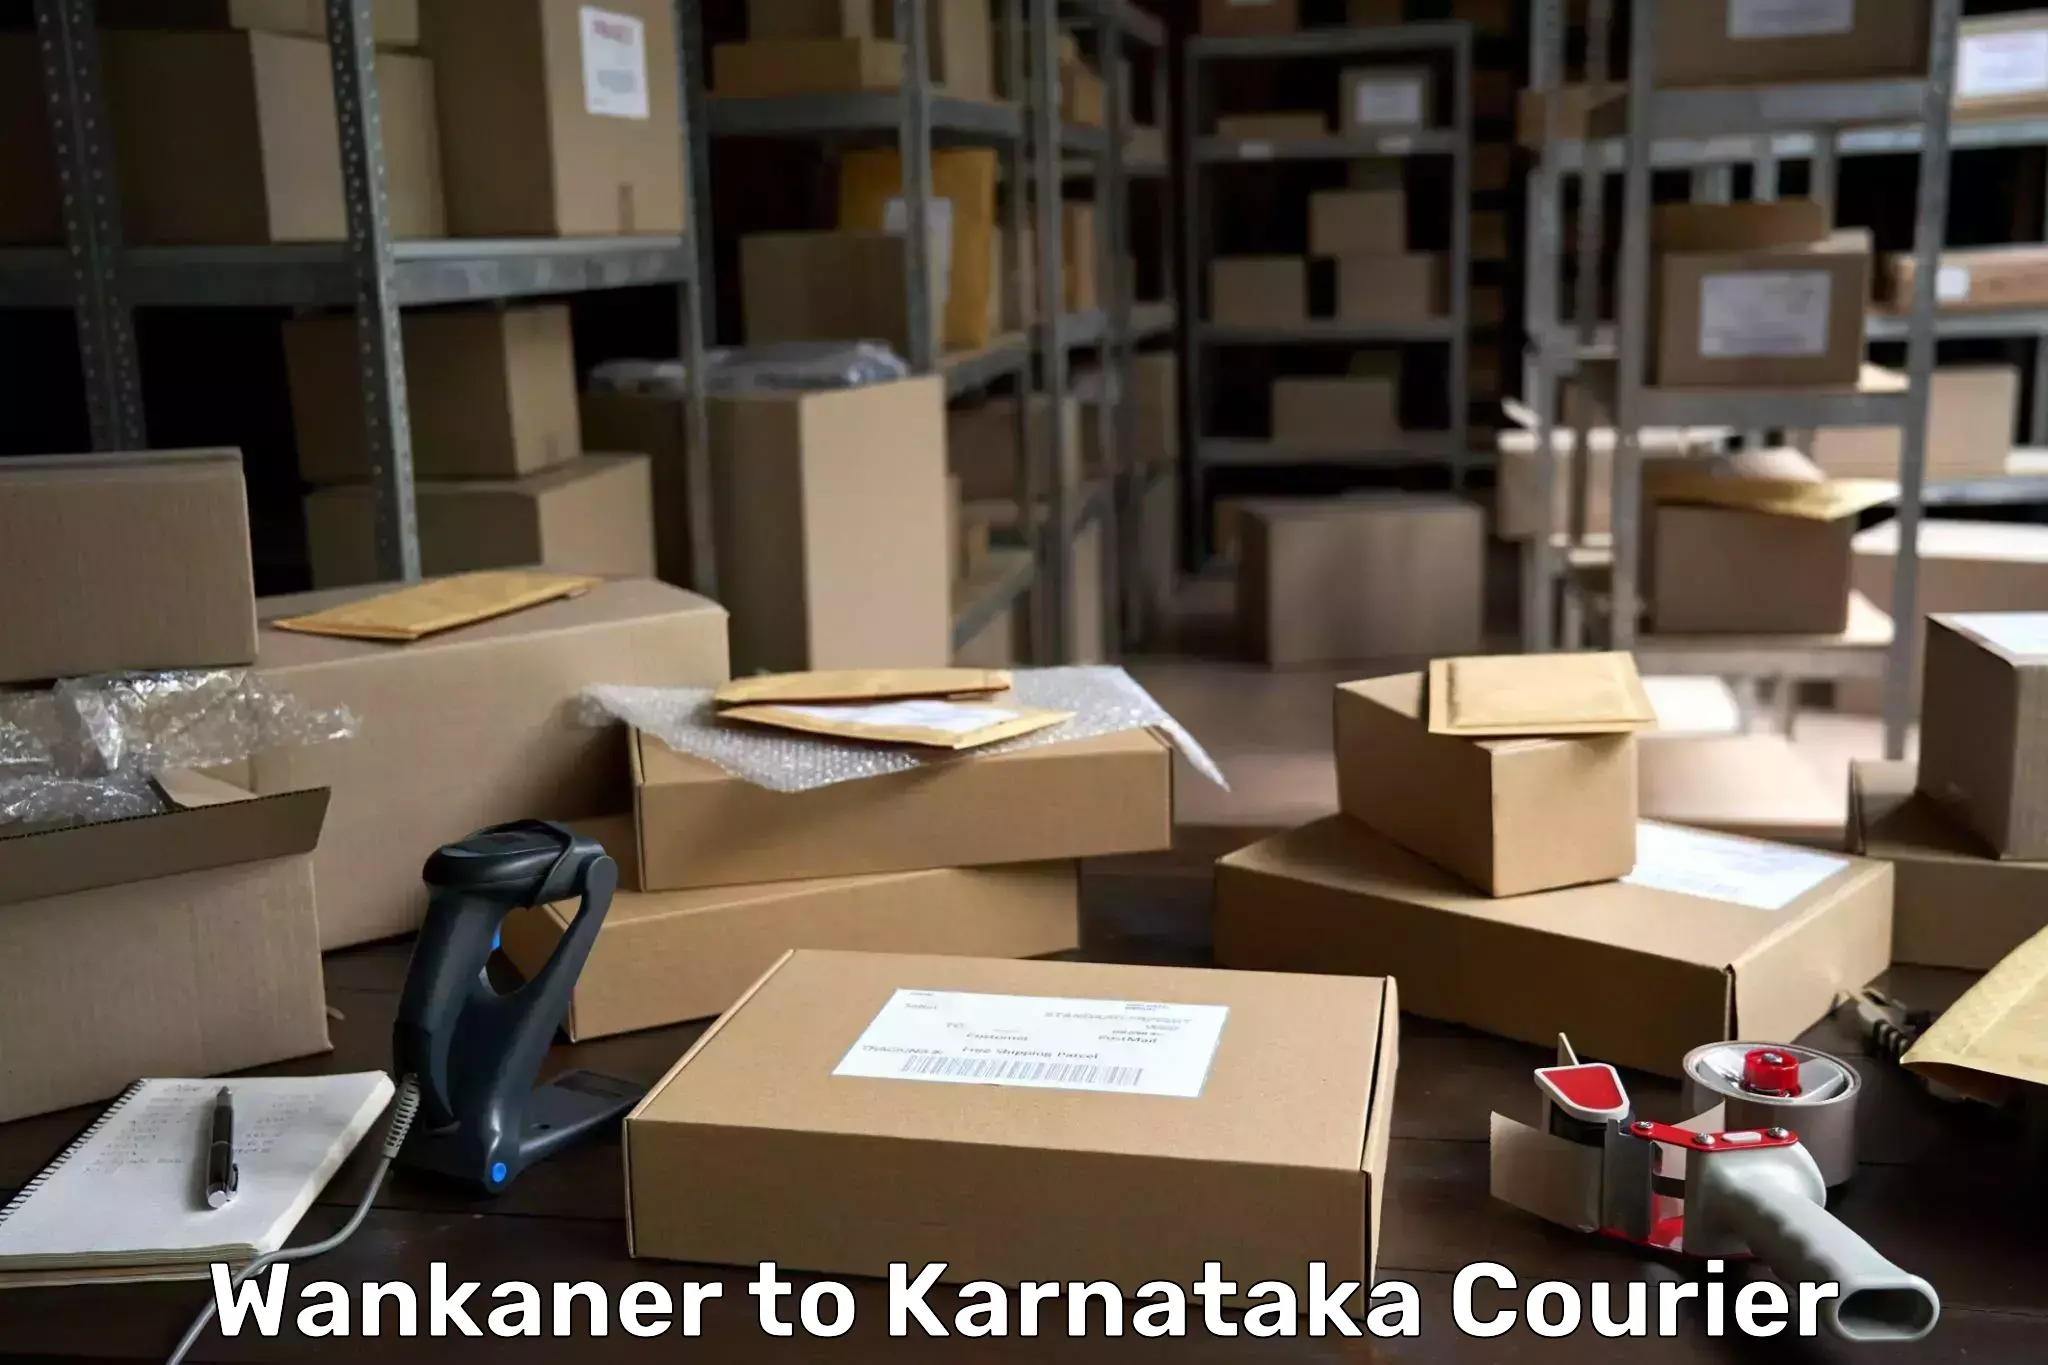 Reliable delivery network Wankaner to Karnataka